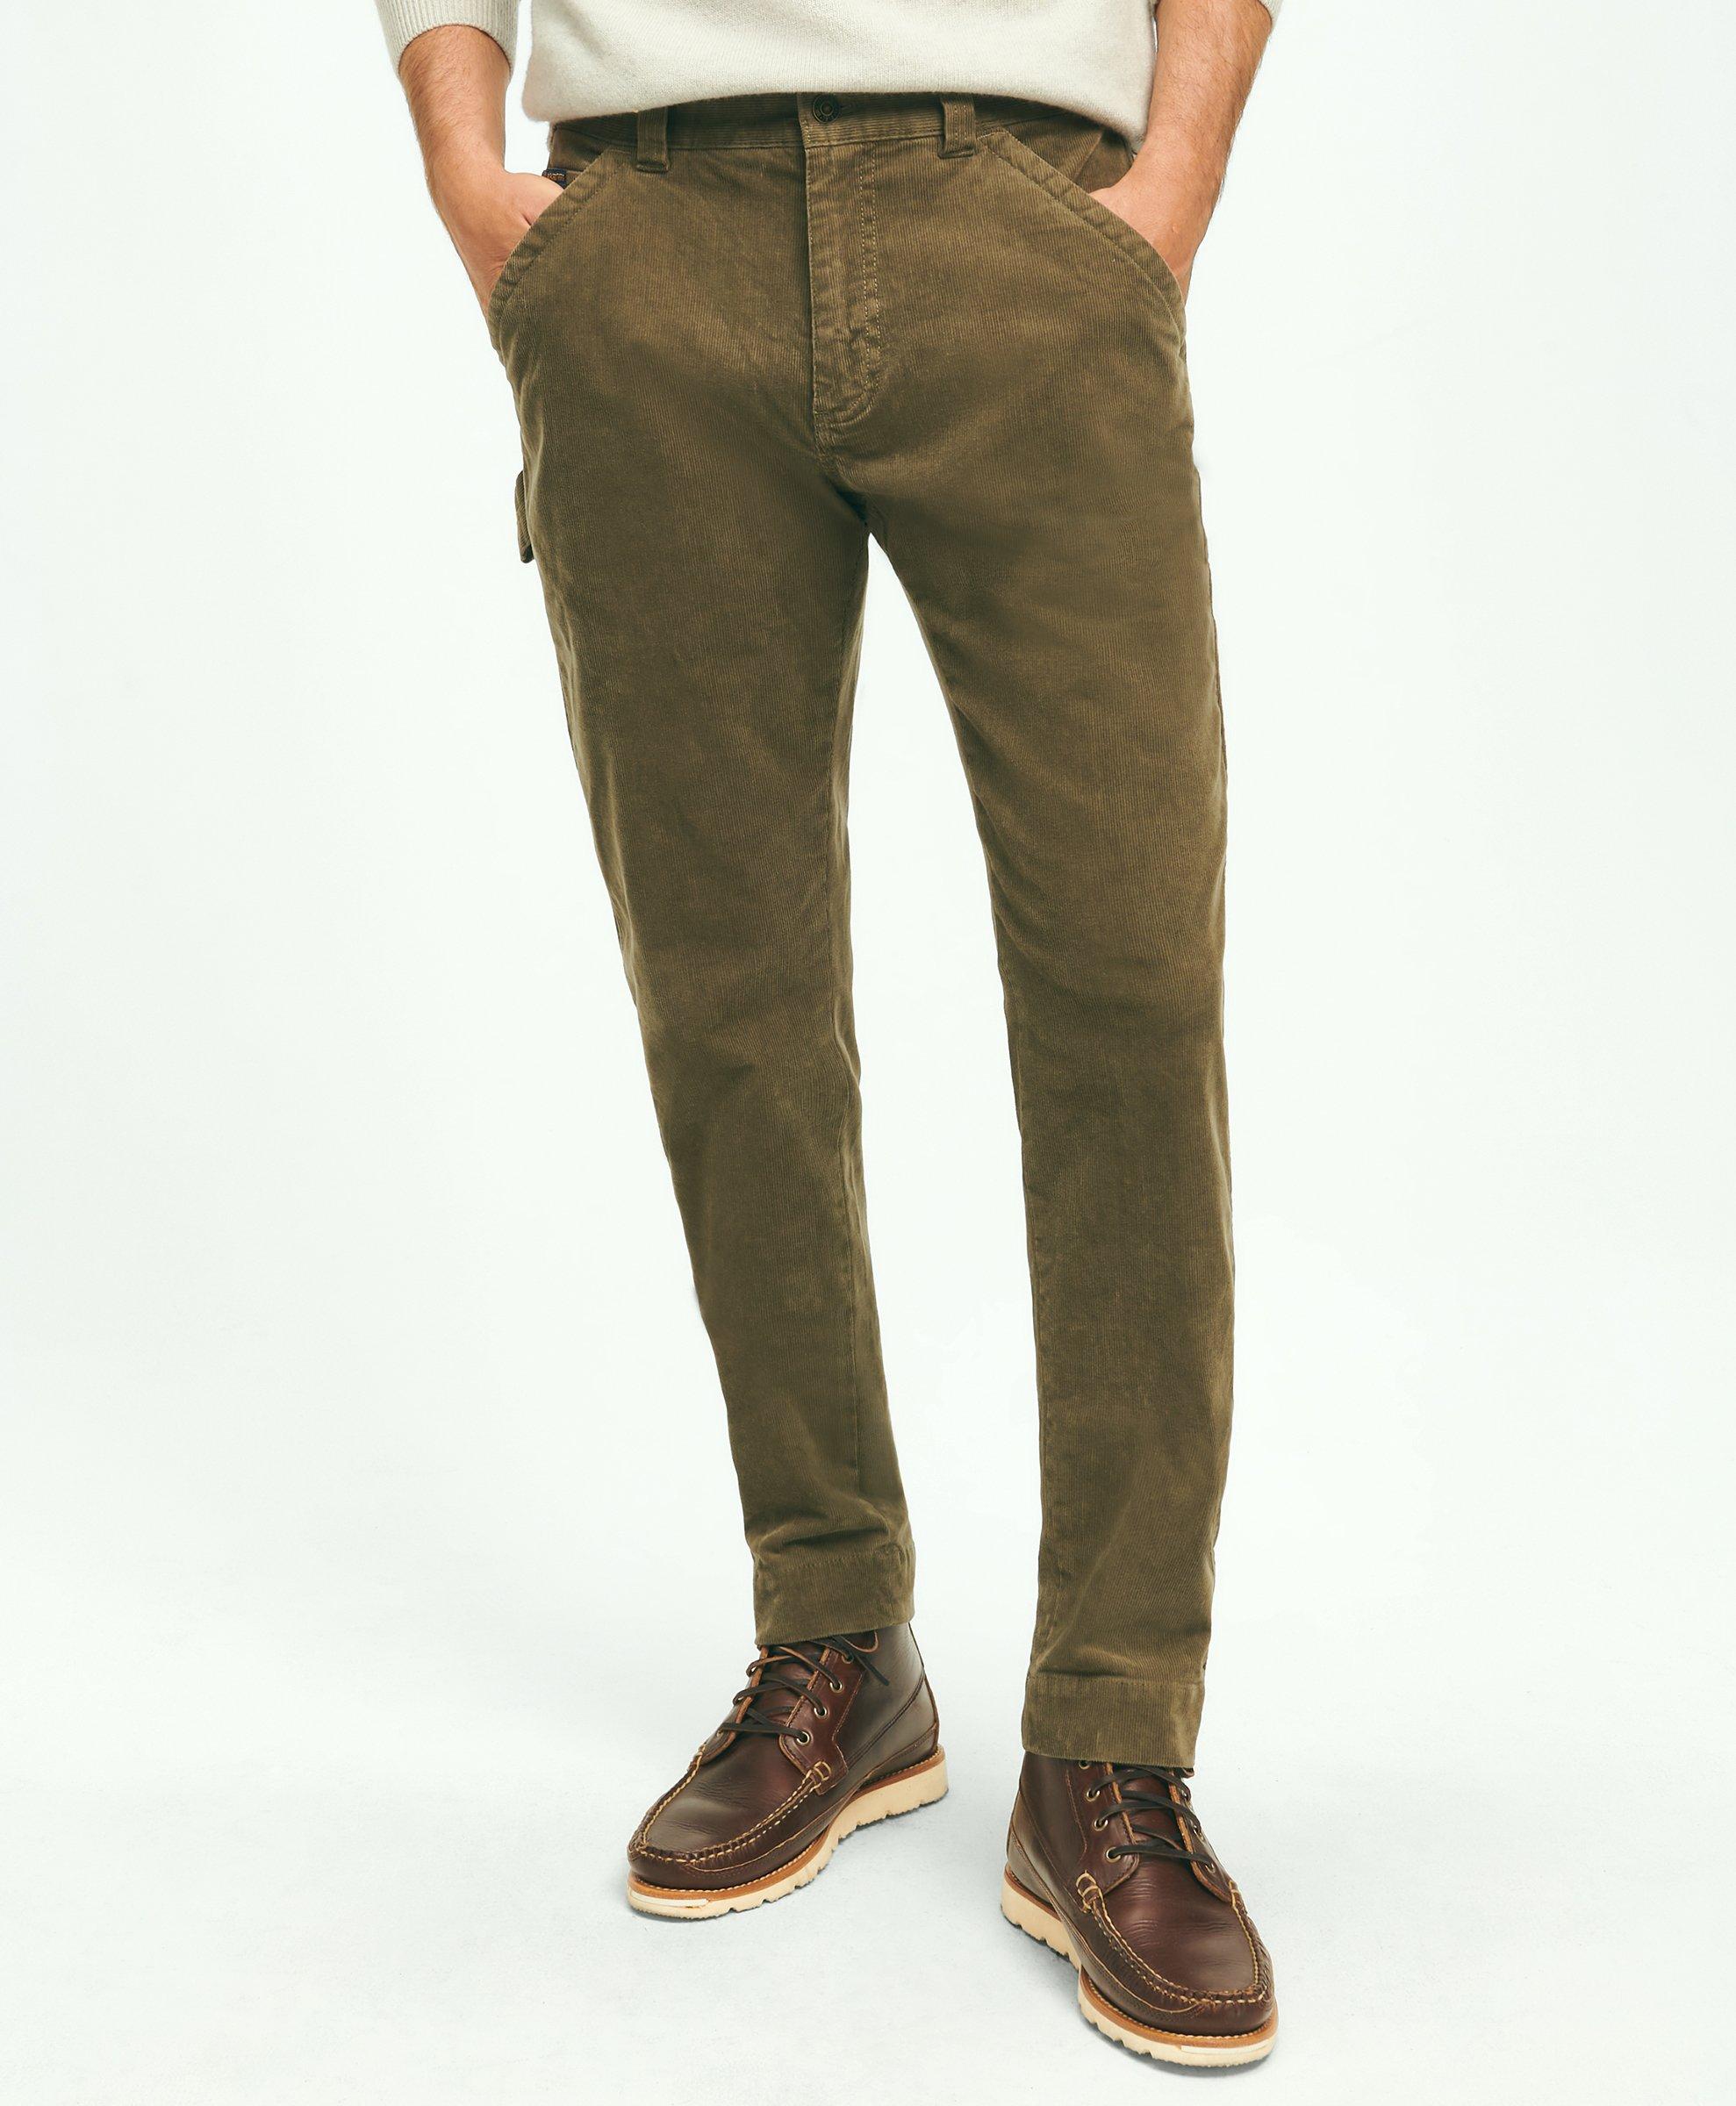 Bobbie Brooks Camo Multi Color Green Casual Pants Size XL - 56% off